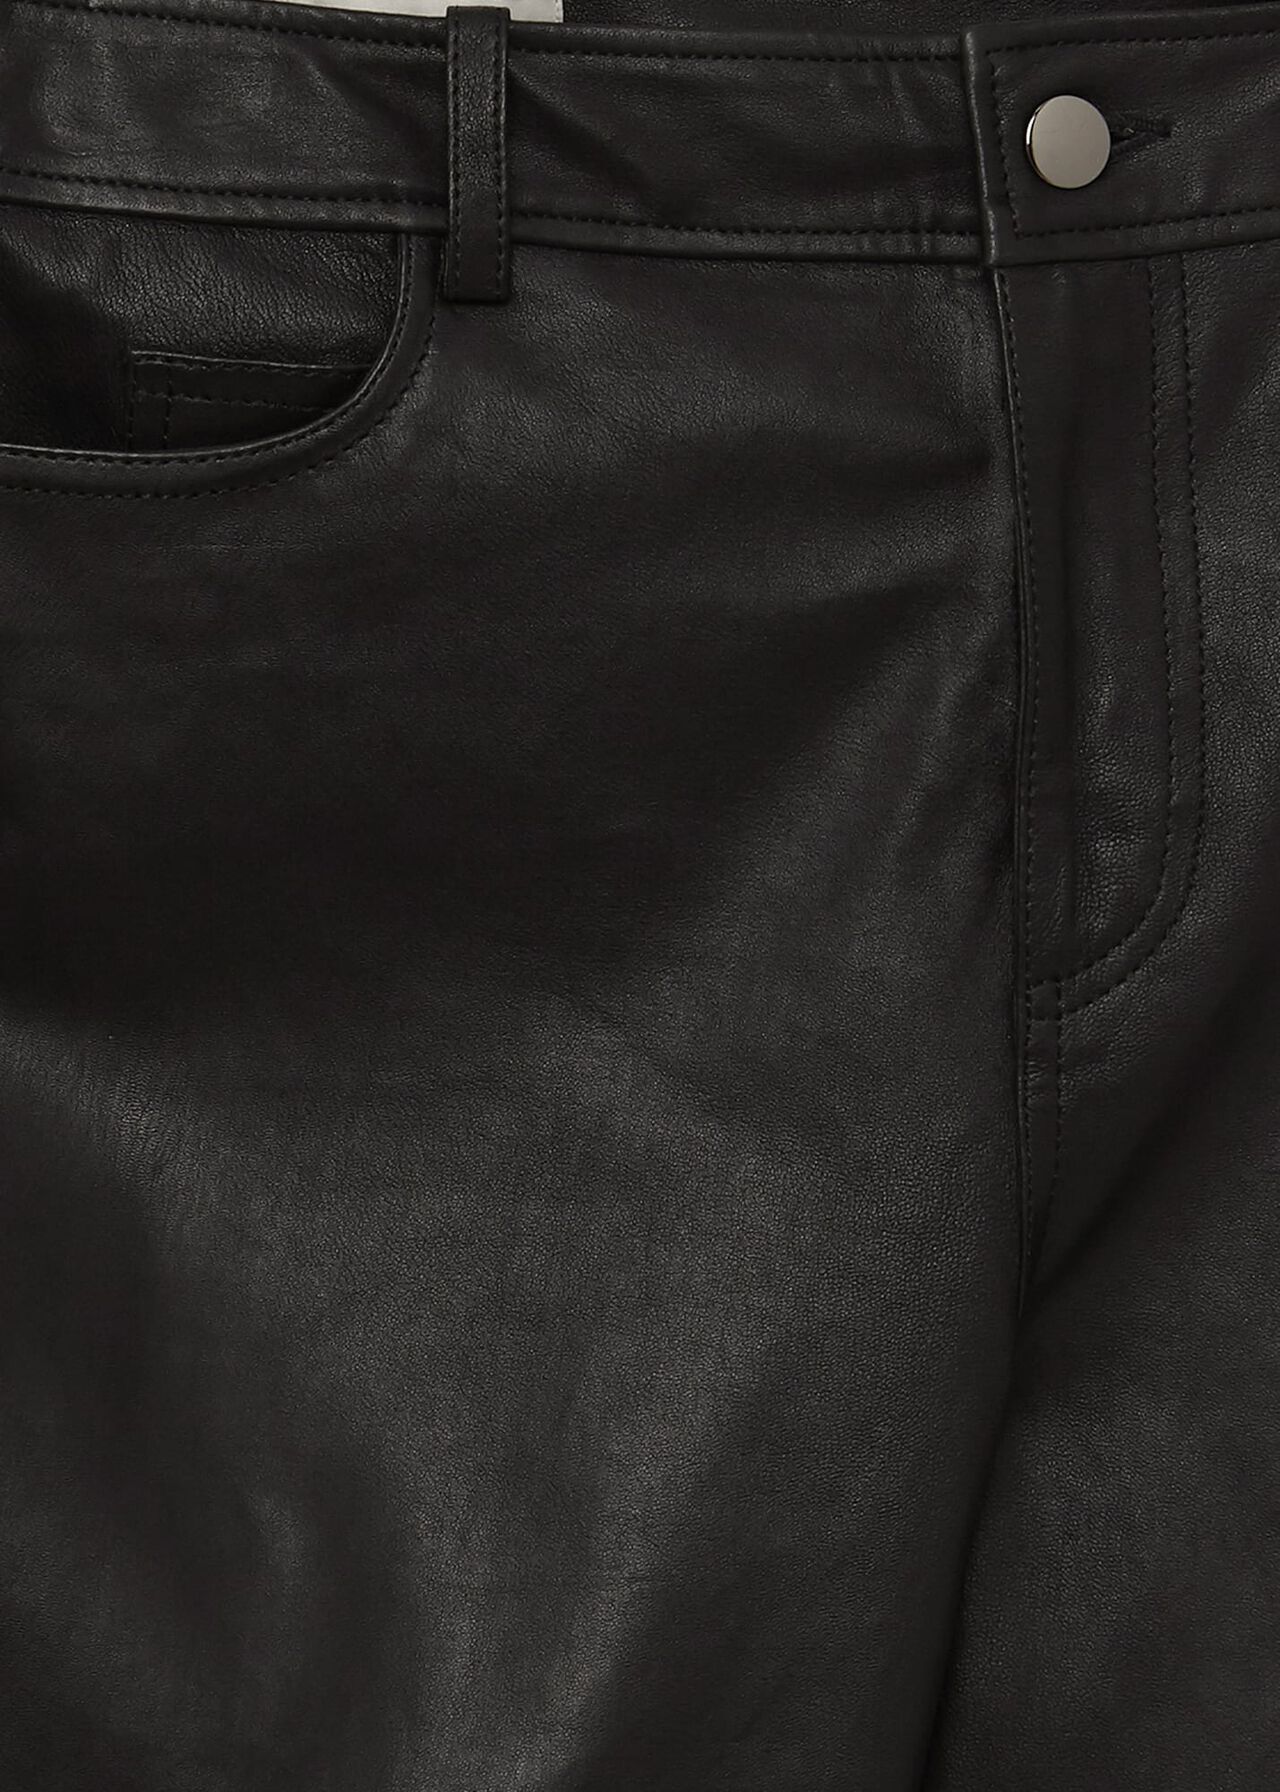 Gia Stretch Leather Jean, Black, hi-res